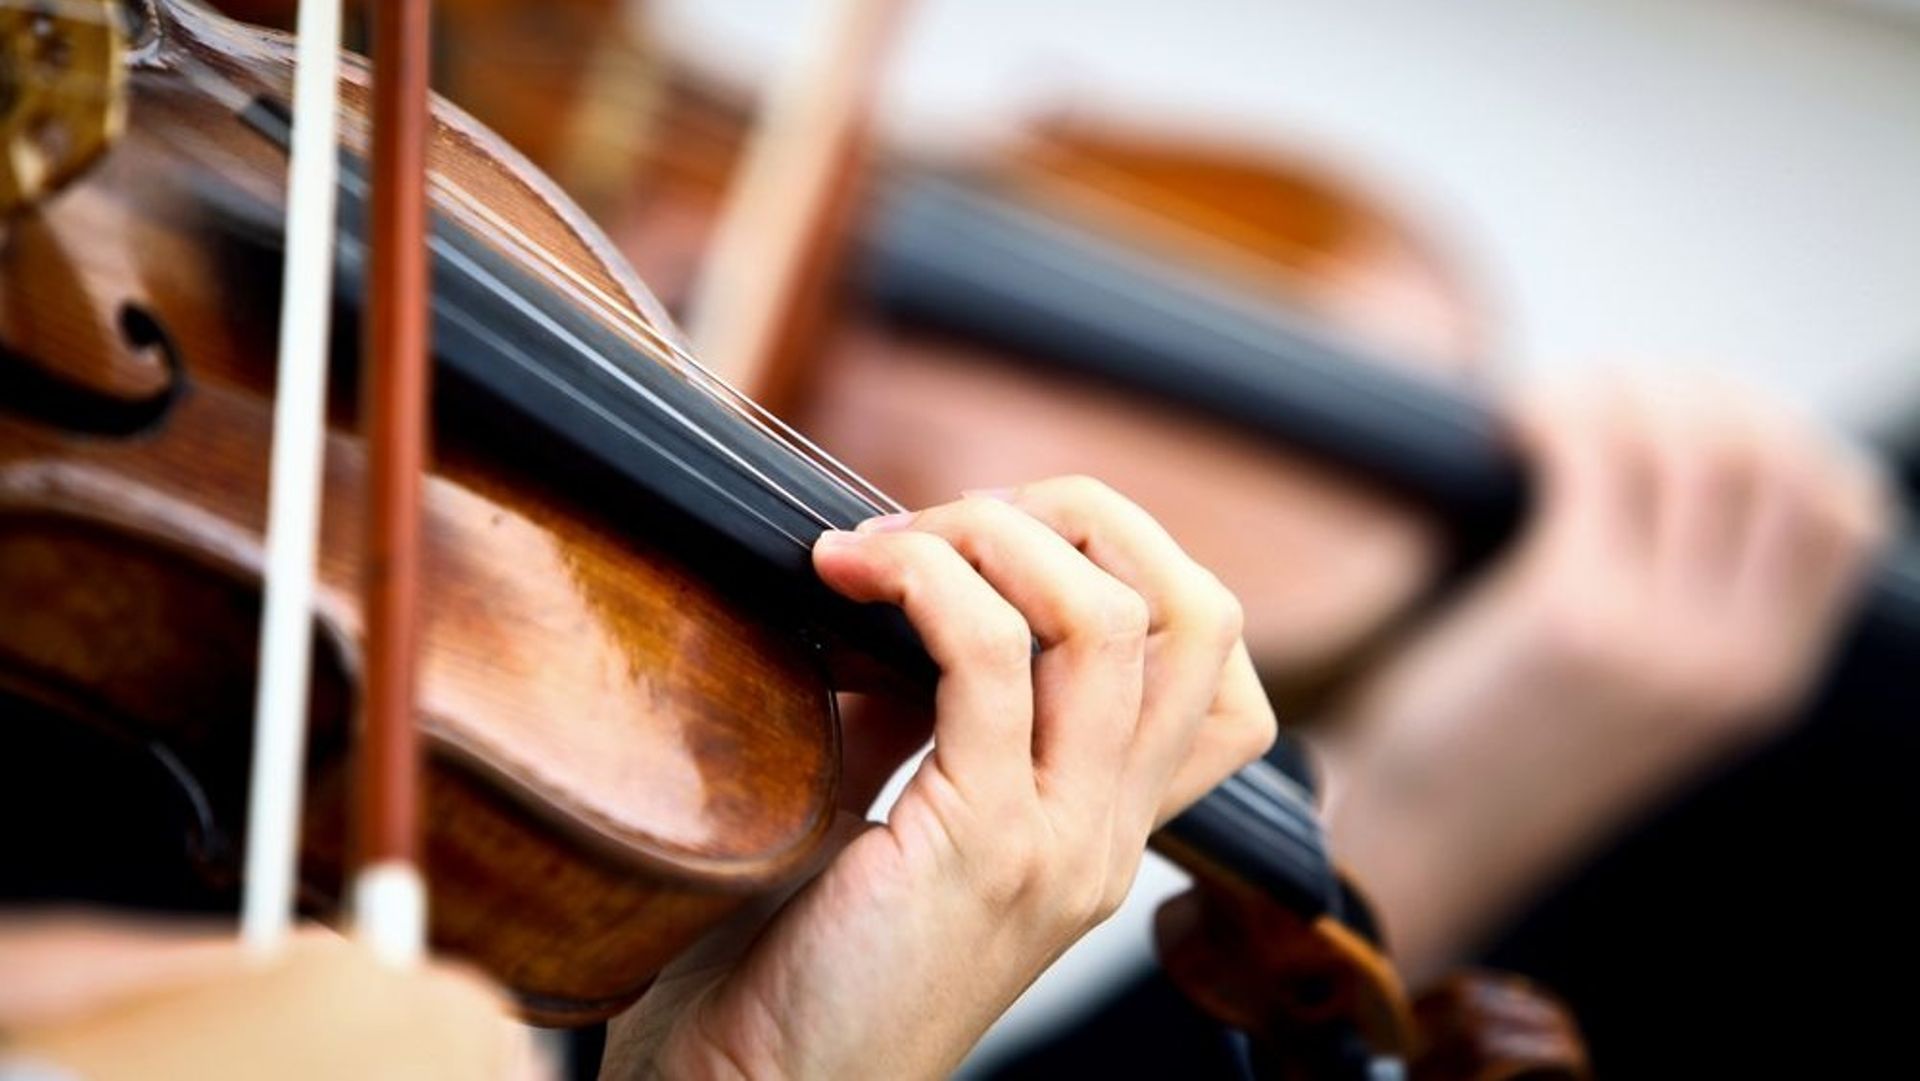 Sony va diffuser via internet des concerts de musique classique en qualité studio en direct